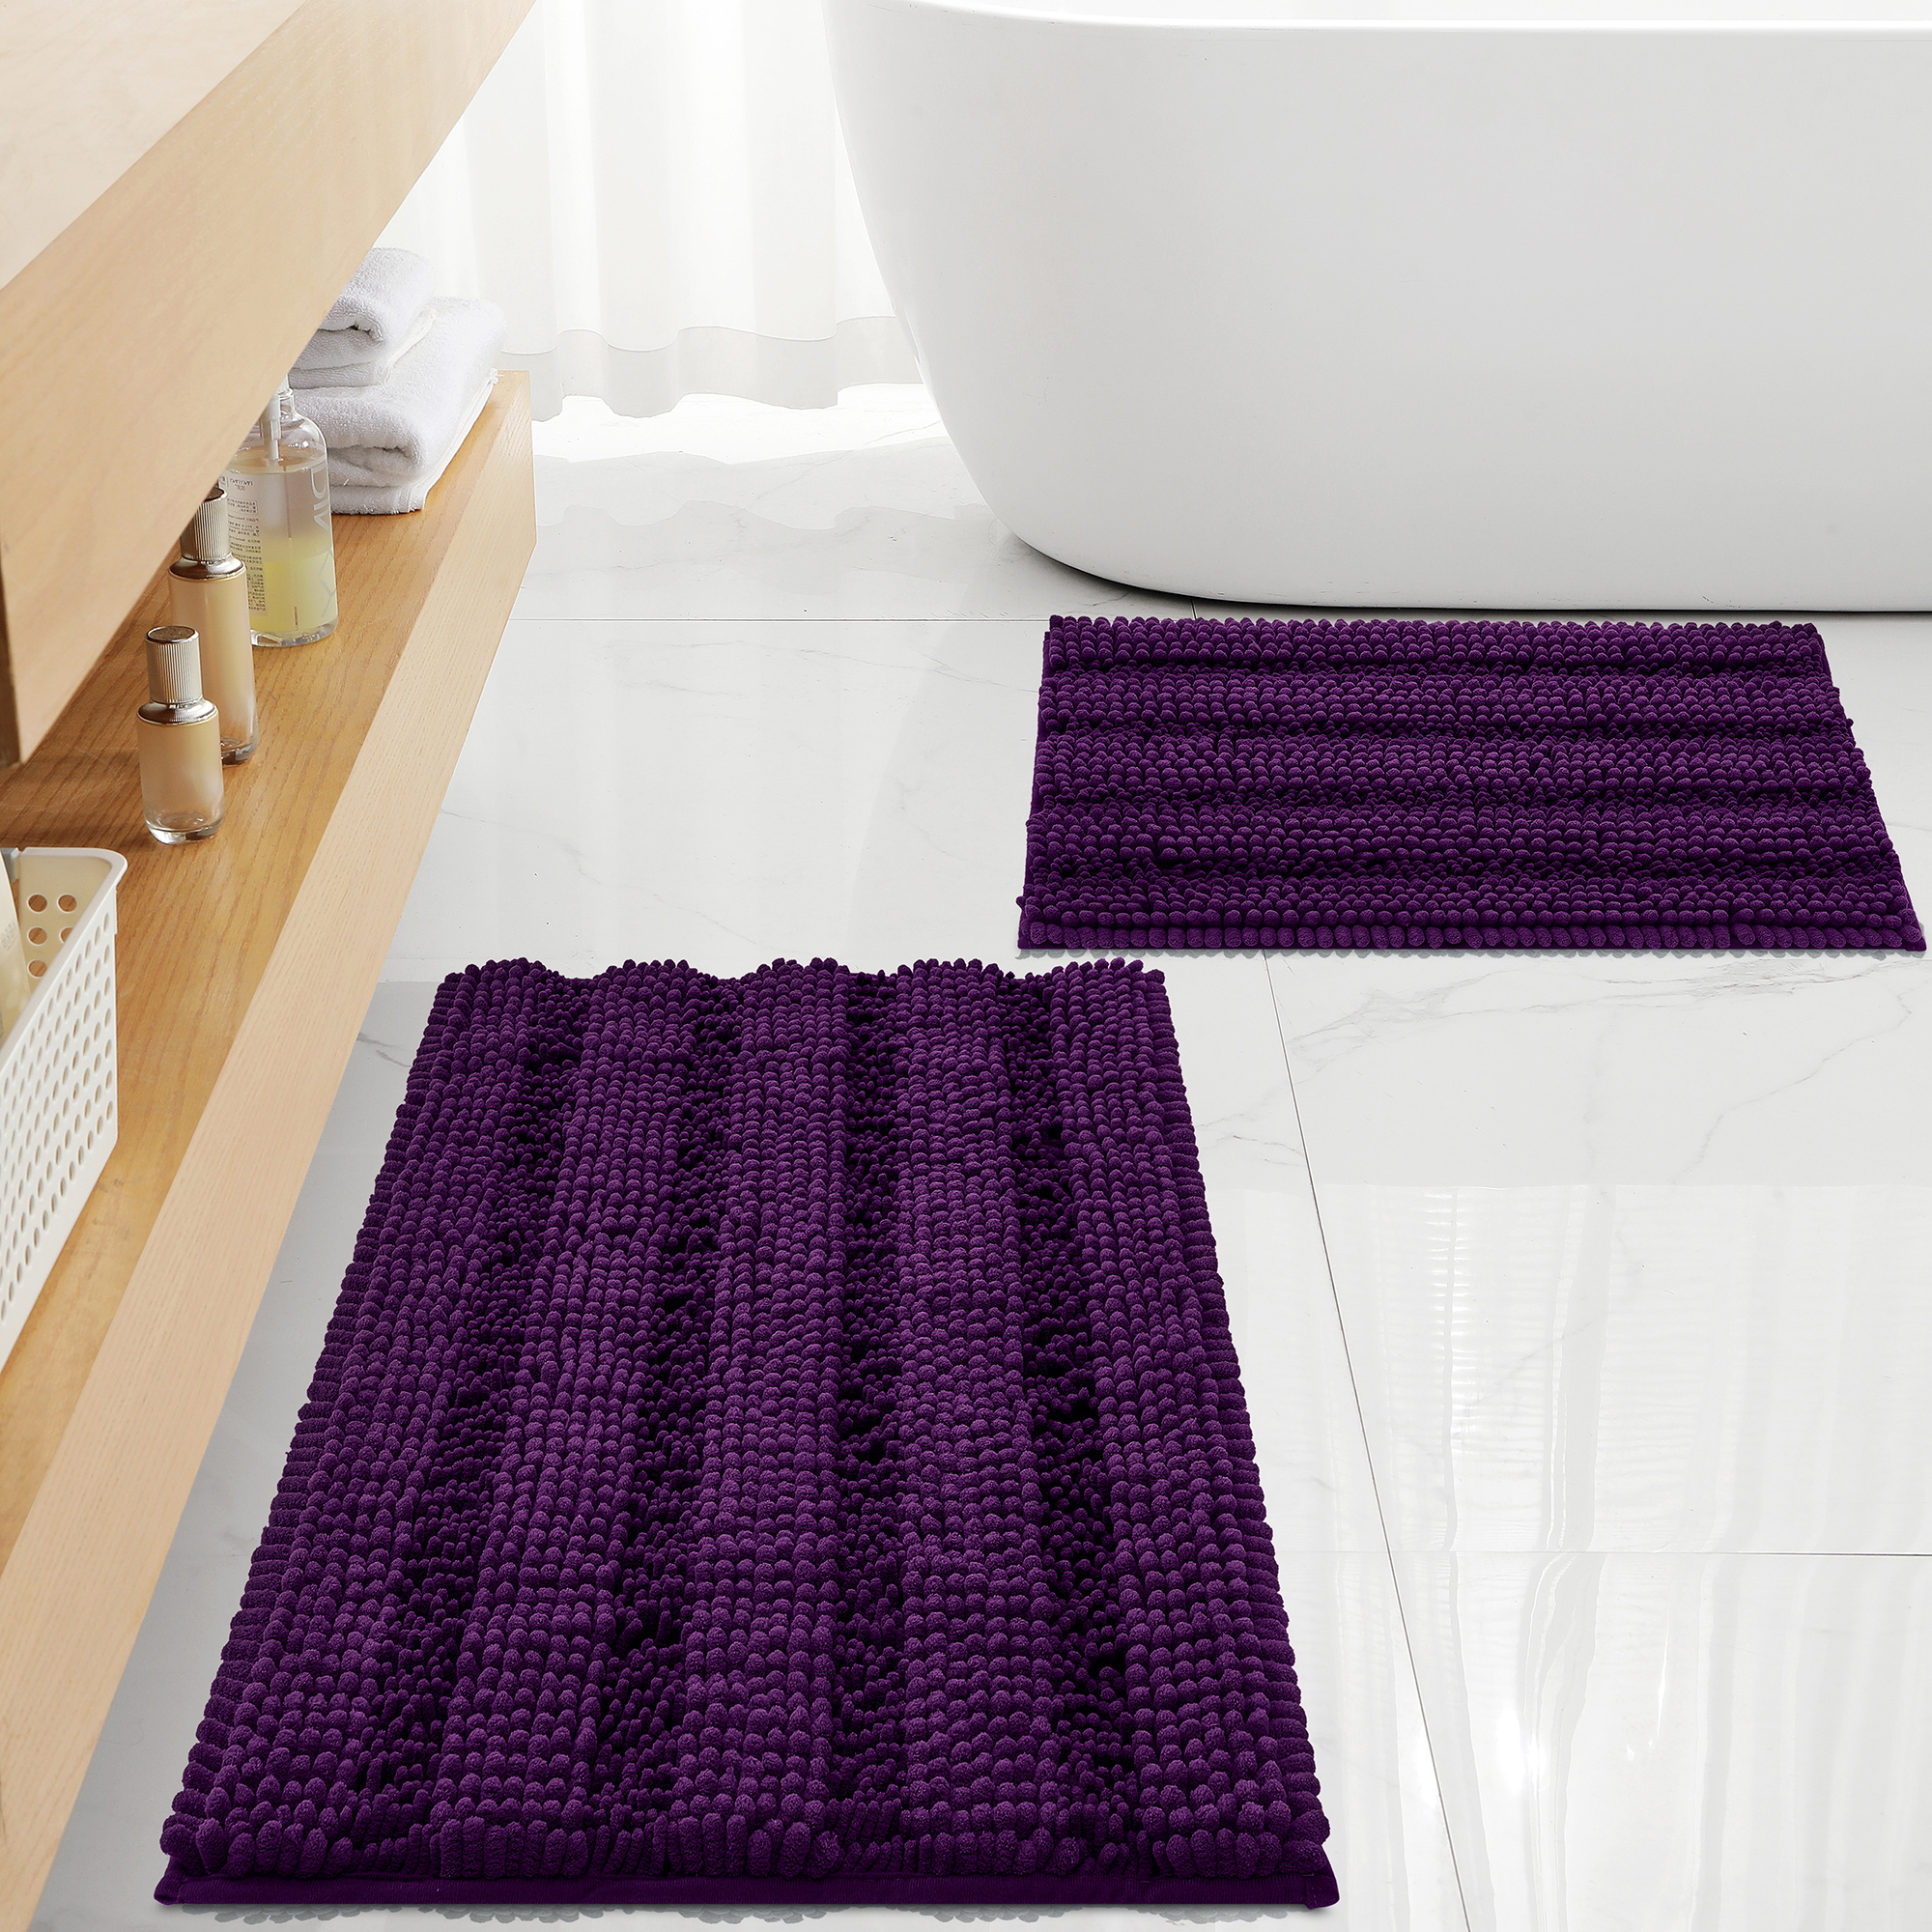 MAYSHINE Bathroom Rug Toilet Sets and Shaggy Non Slip Machine Washable Soft Microfiber Bath Contour Mat (Plum, 32x20 / 20x20 Inches U-Shaped), Purple